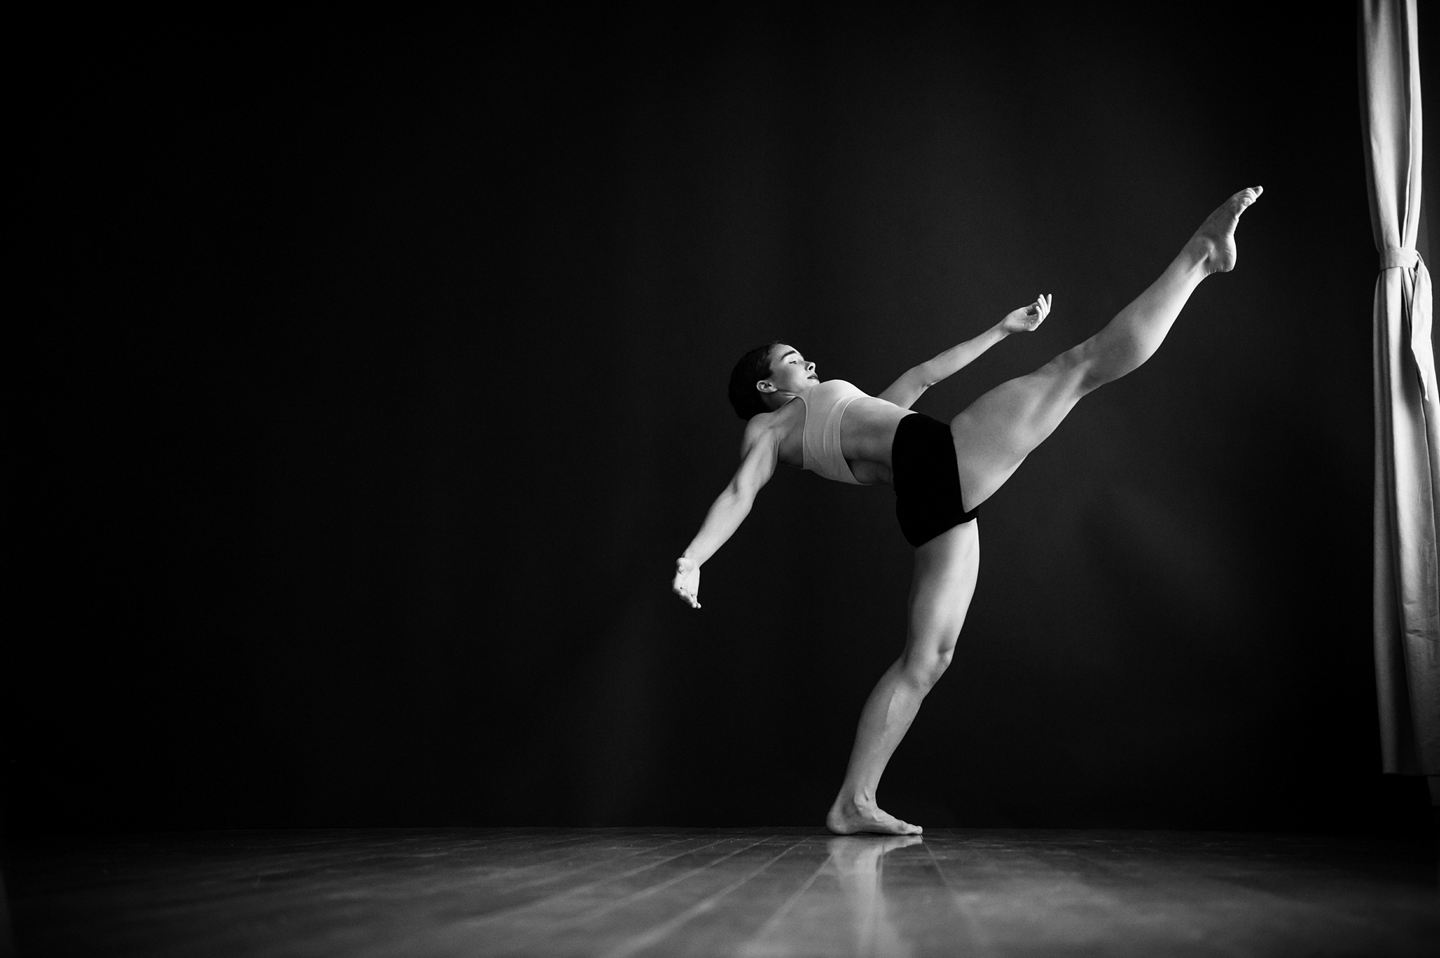 Los Angeles Dance Portrait Photo - Olga Sokolova - by Tommy Xing Photography 08.JPG